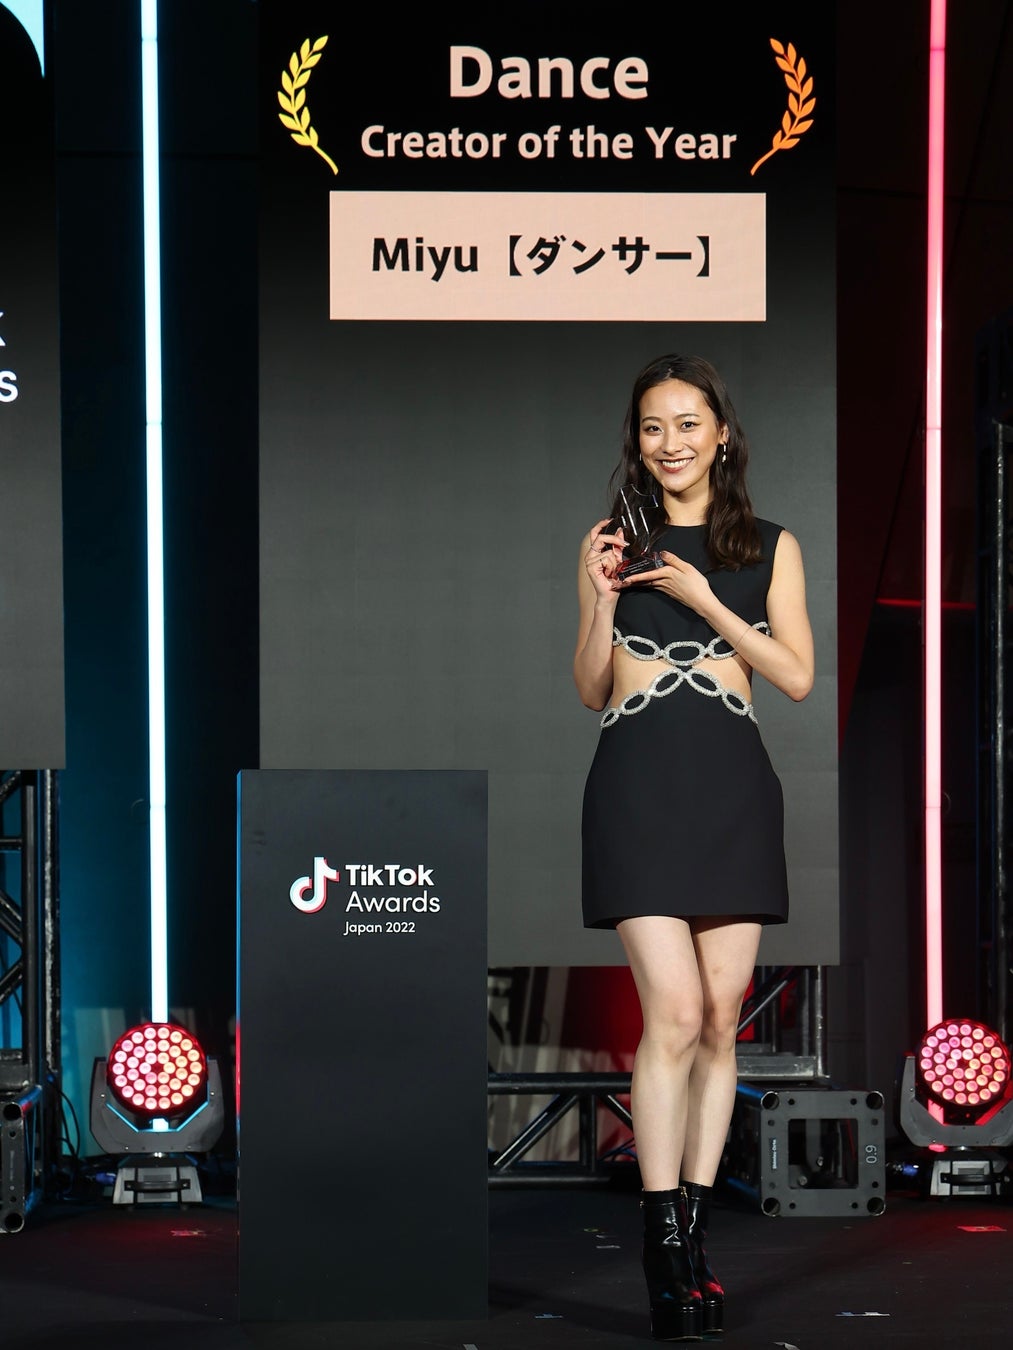 【TikTok Awards Japan 2022】Miyu、今年TikTokでスキルフルなダンスで人々を圧倒したクリエイターを表彰する「Dance Creator of the Year」を受賞のサブ画像2